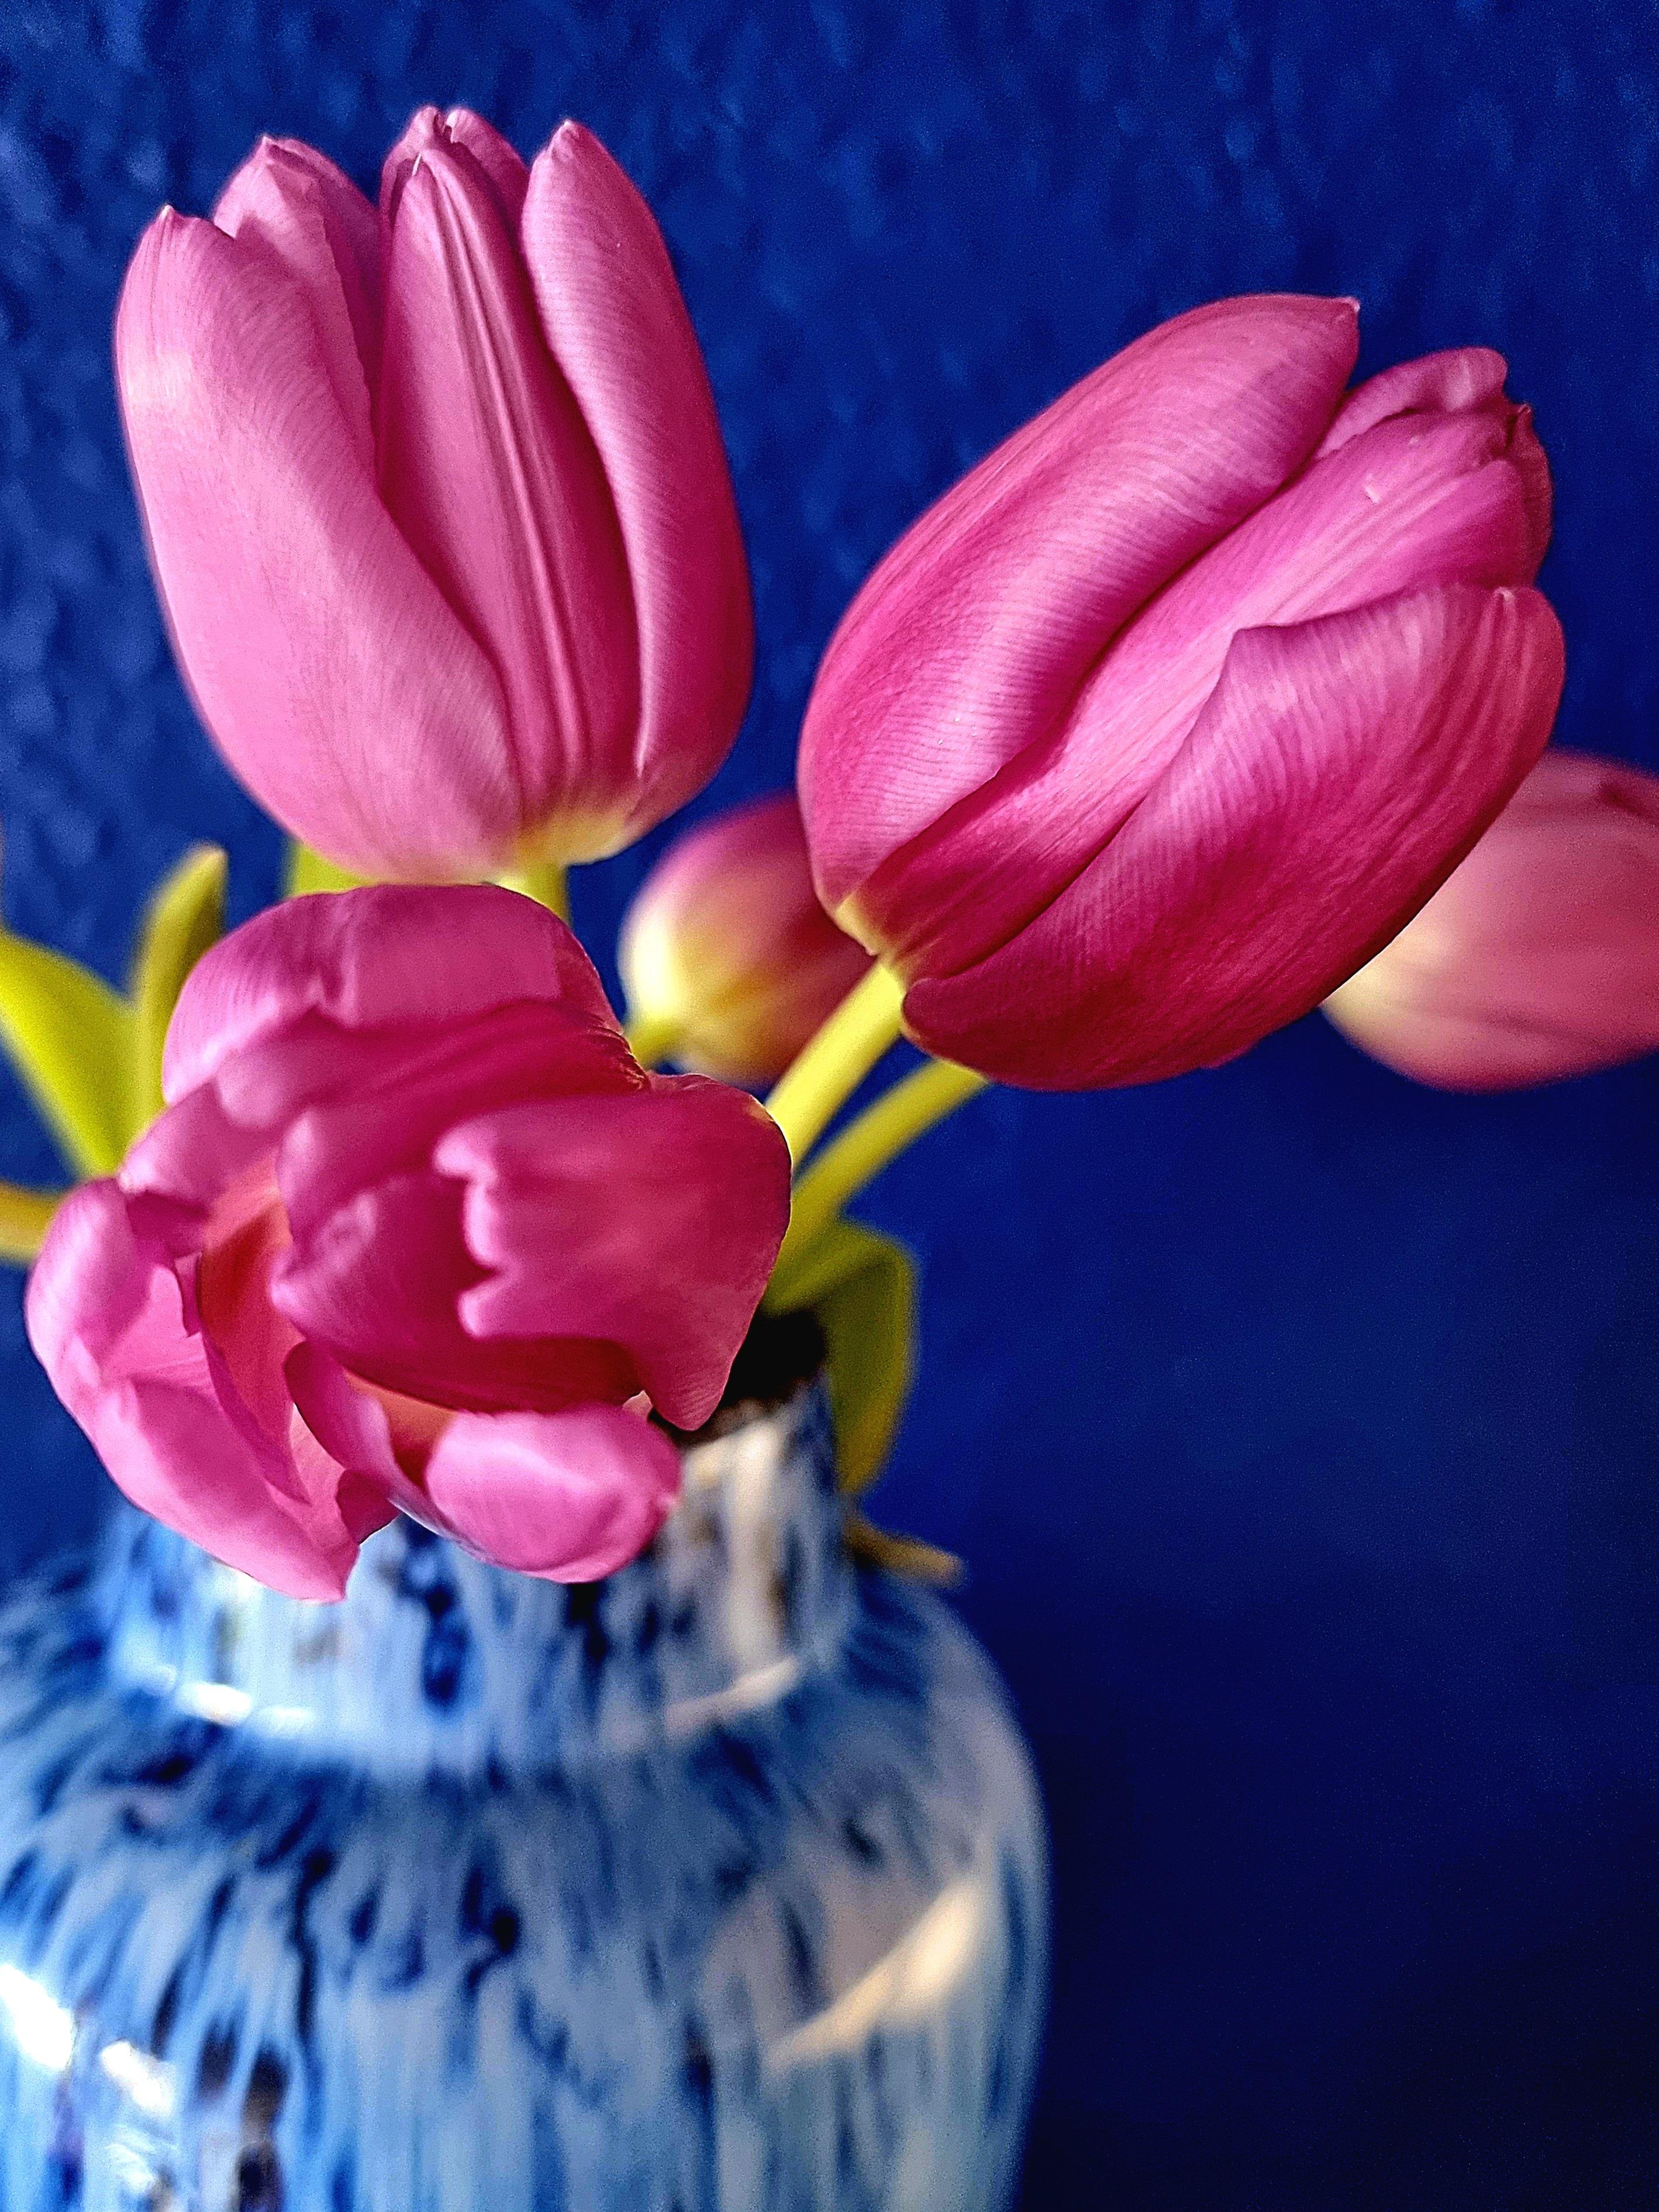 Gutelaunebild 💙🩷 #vase #freshflowerfriday #wandfarbe #küche #vintage #interior #januar #blumen #vasenliebe #🌷